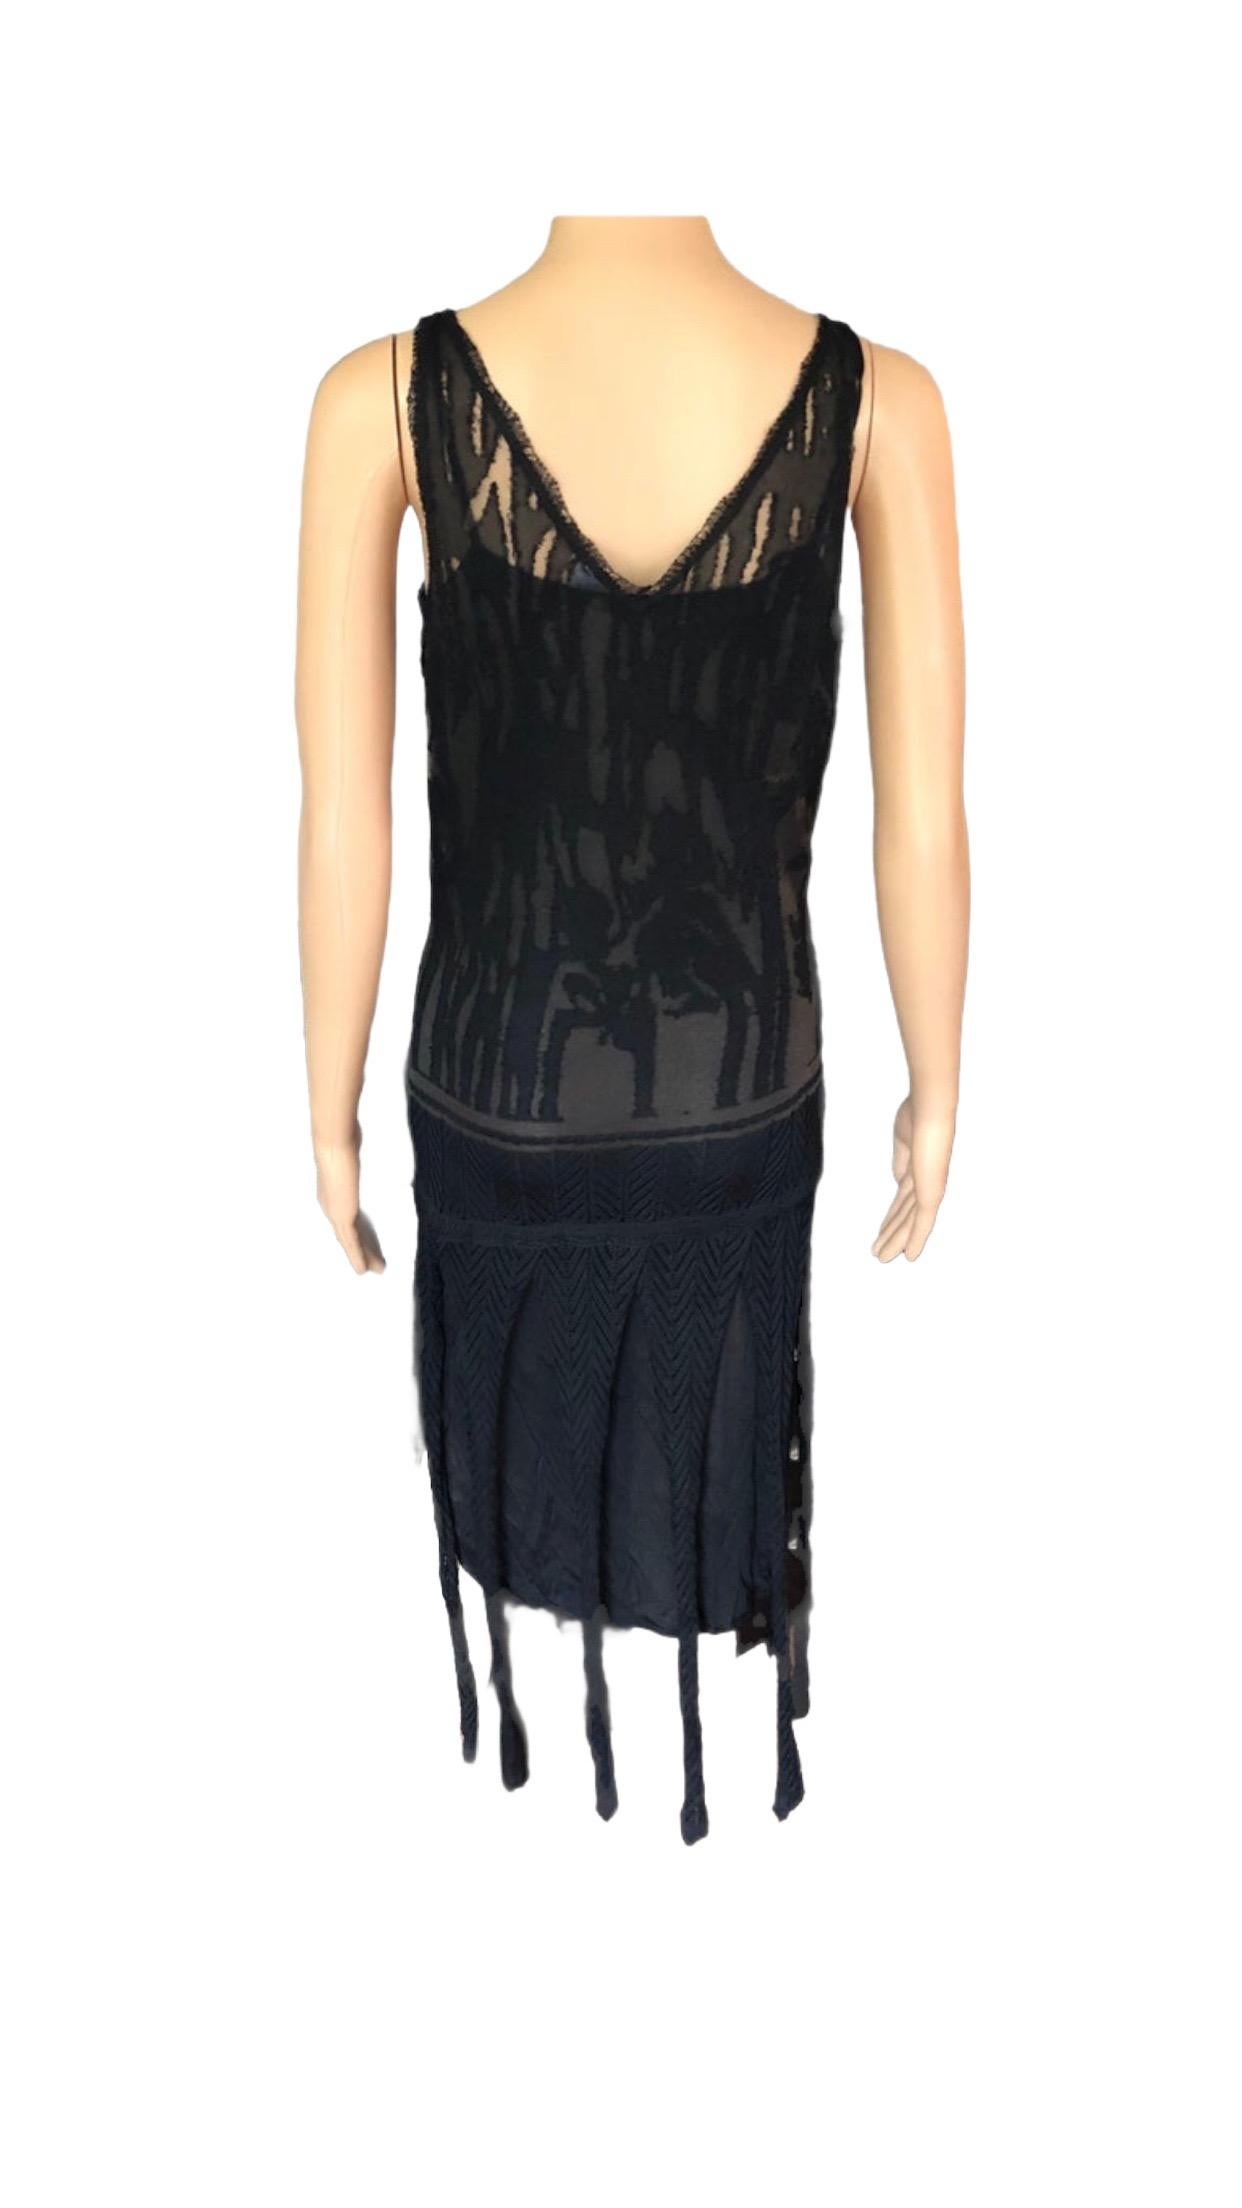 Christian Lacroix Vintage Semi-Sheer Crochet Mesh Knit Fringed Black Dress For Sale 4